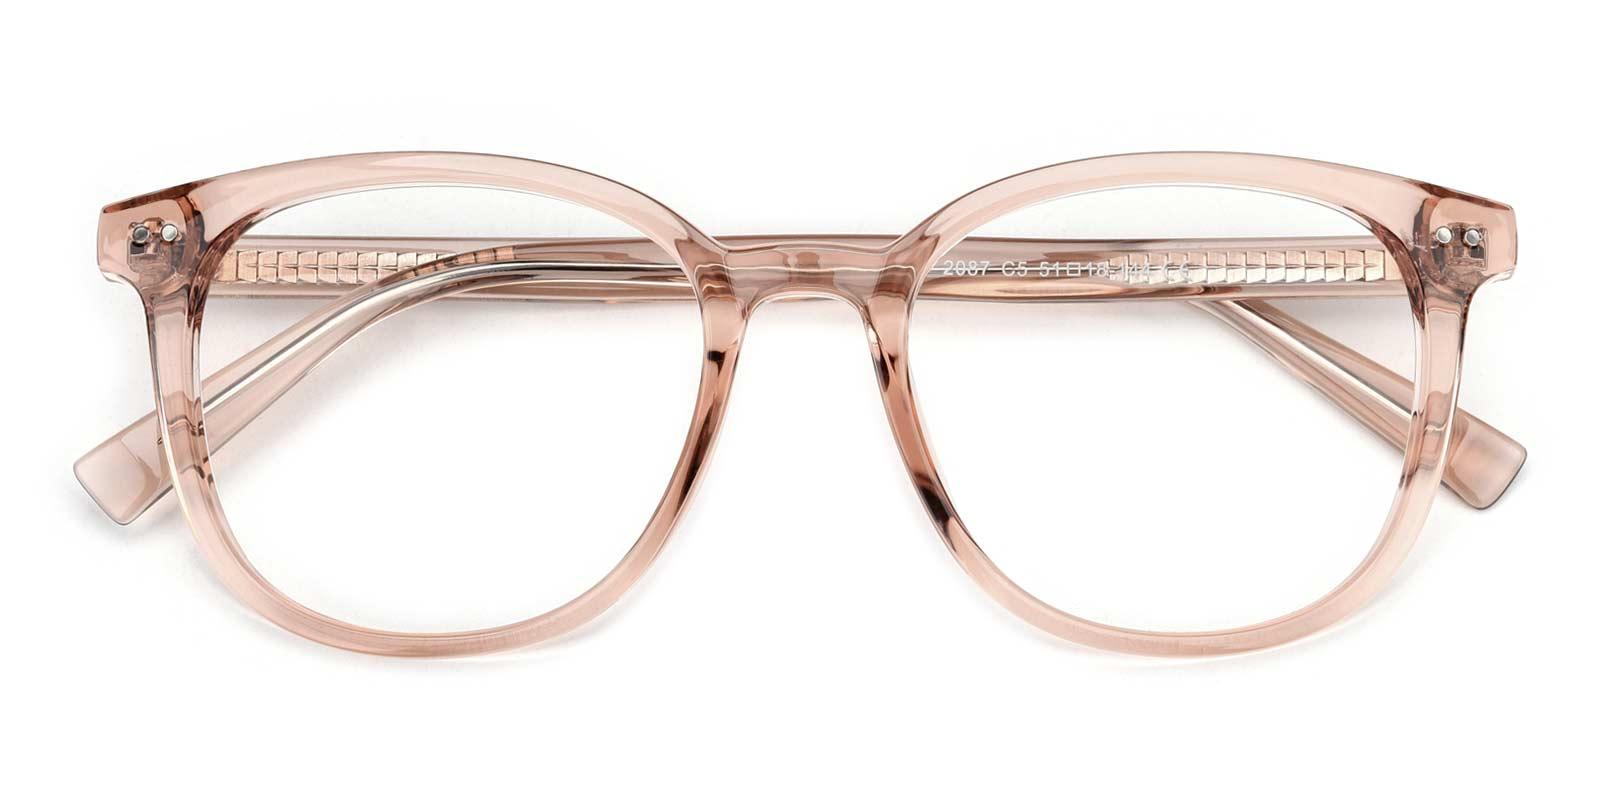 Skyline-Brown-Rectangle / Round / Square-TR-Eyeglasses-detail